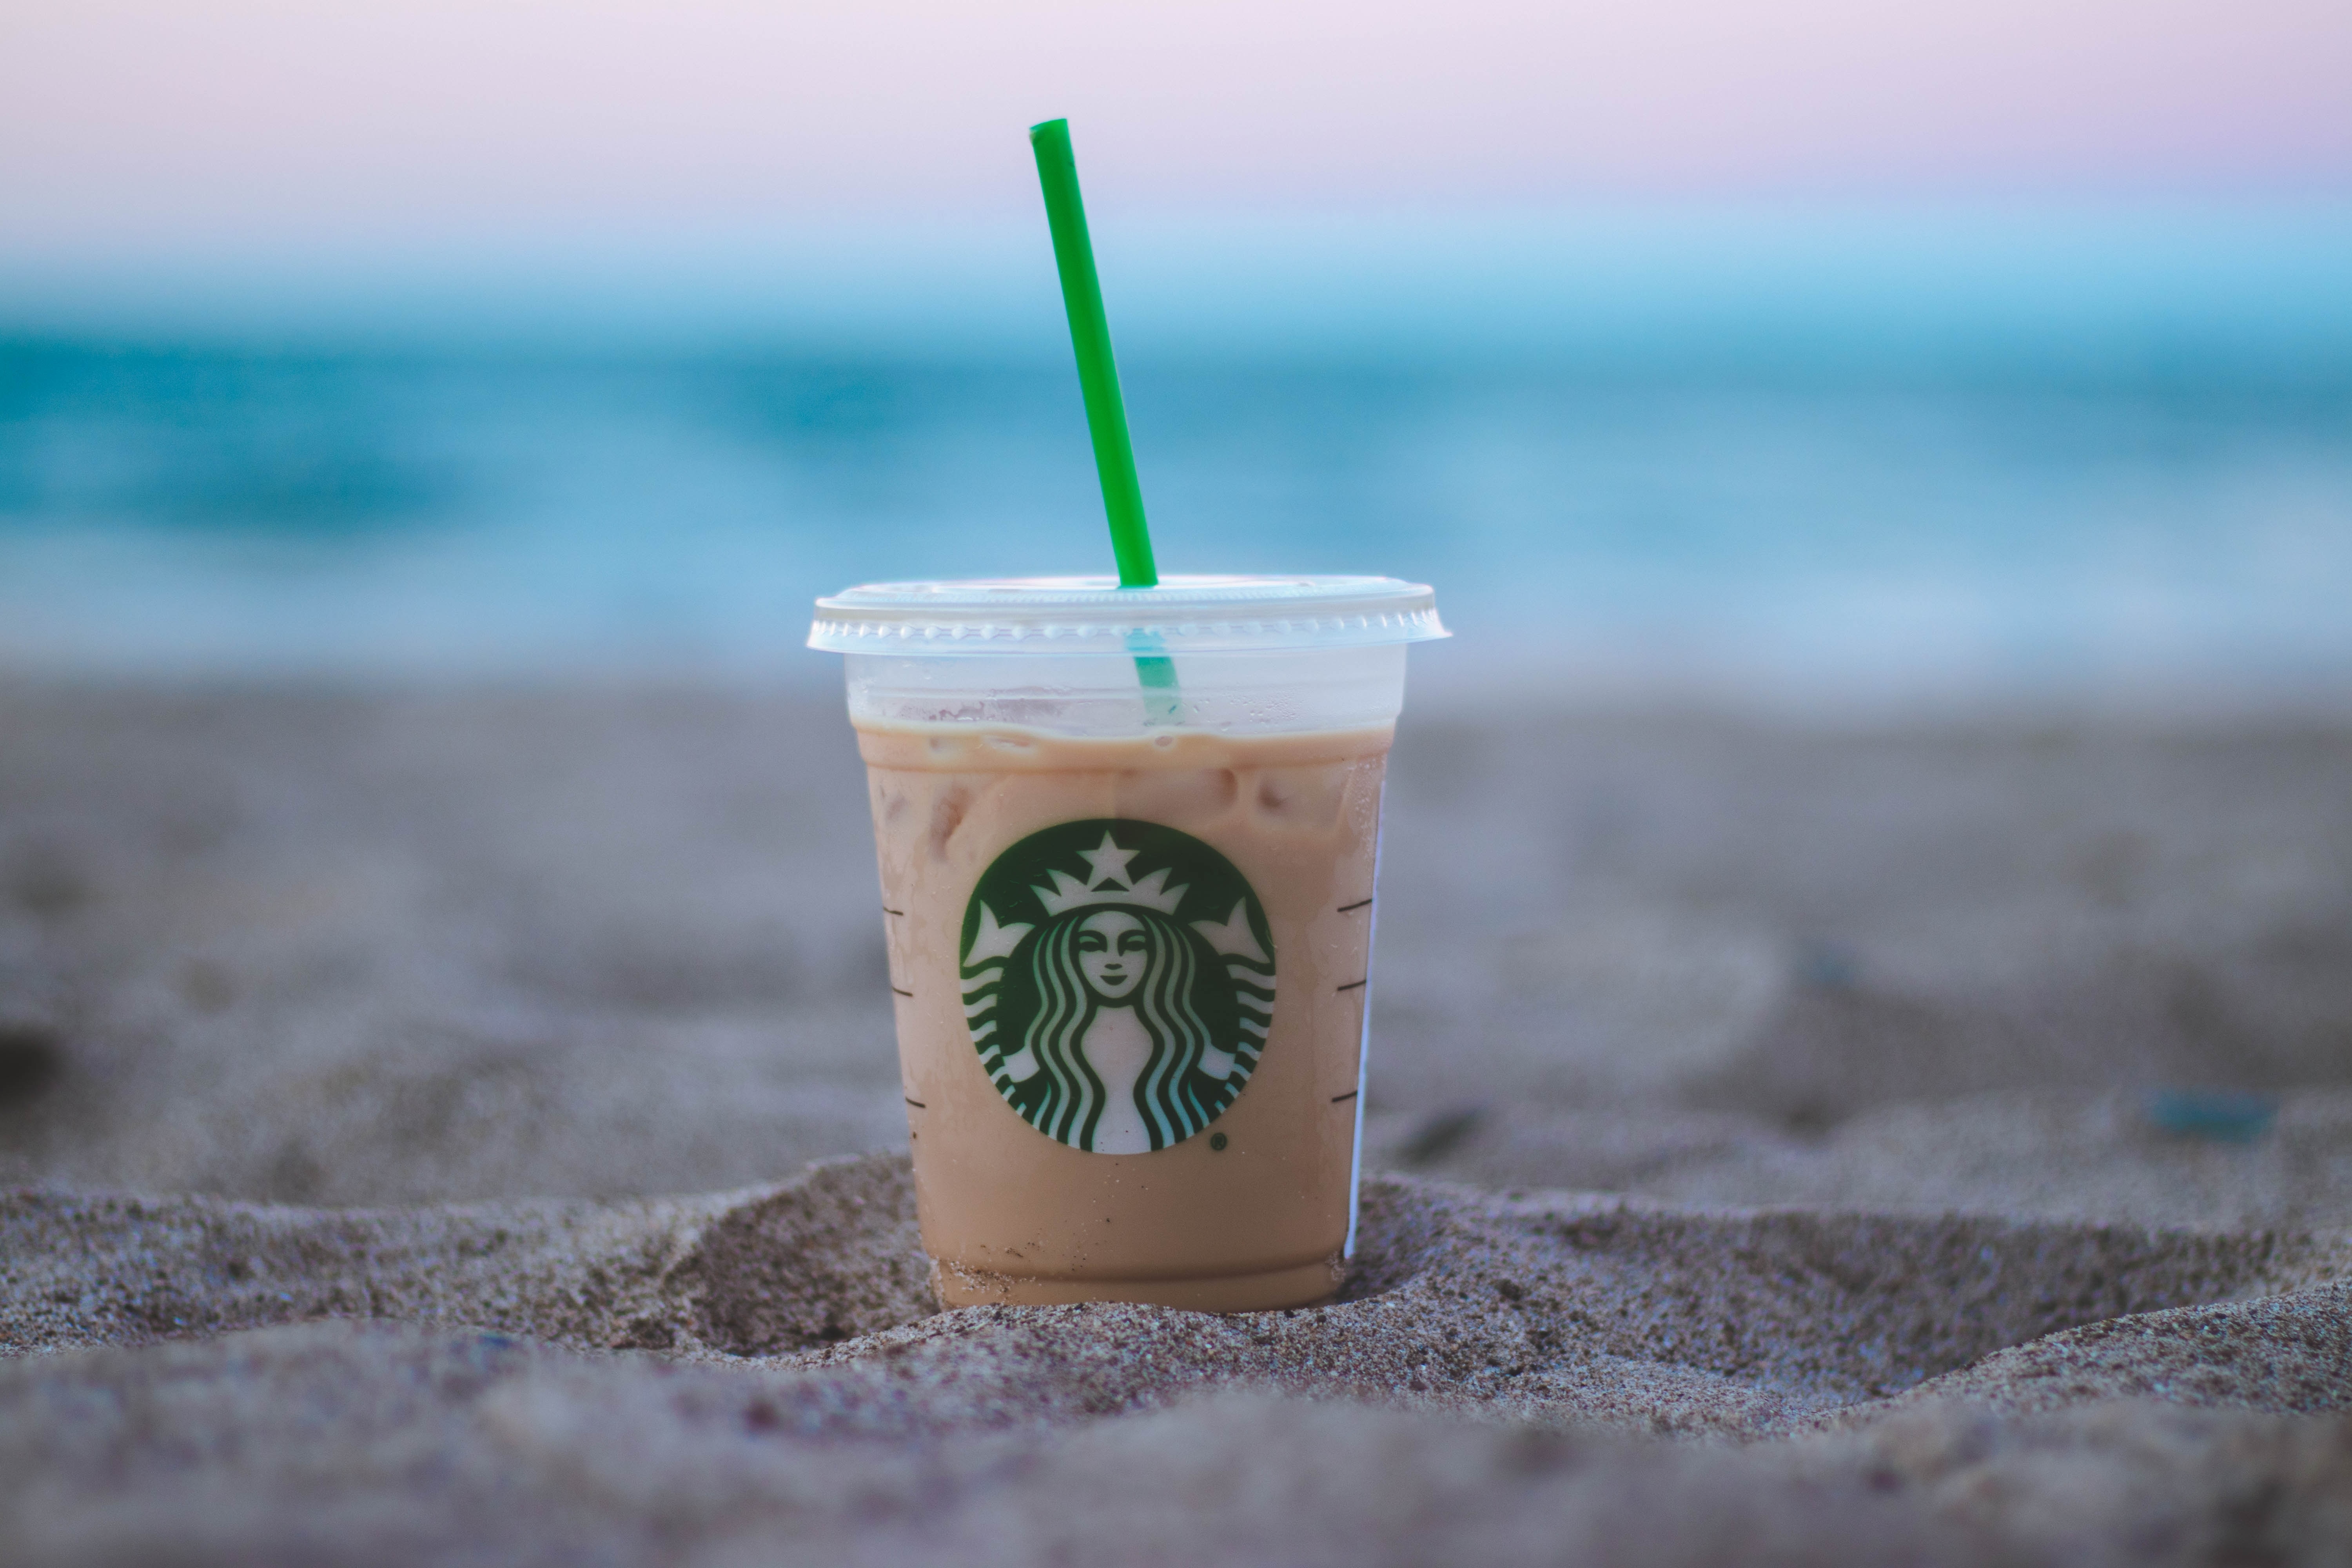 Starbucks coffee cup on the beach.